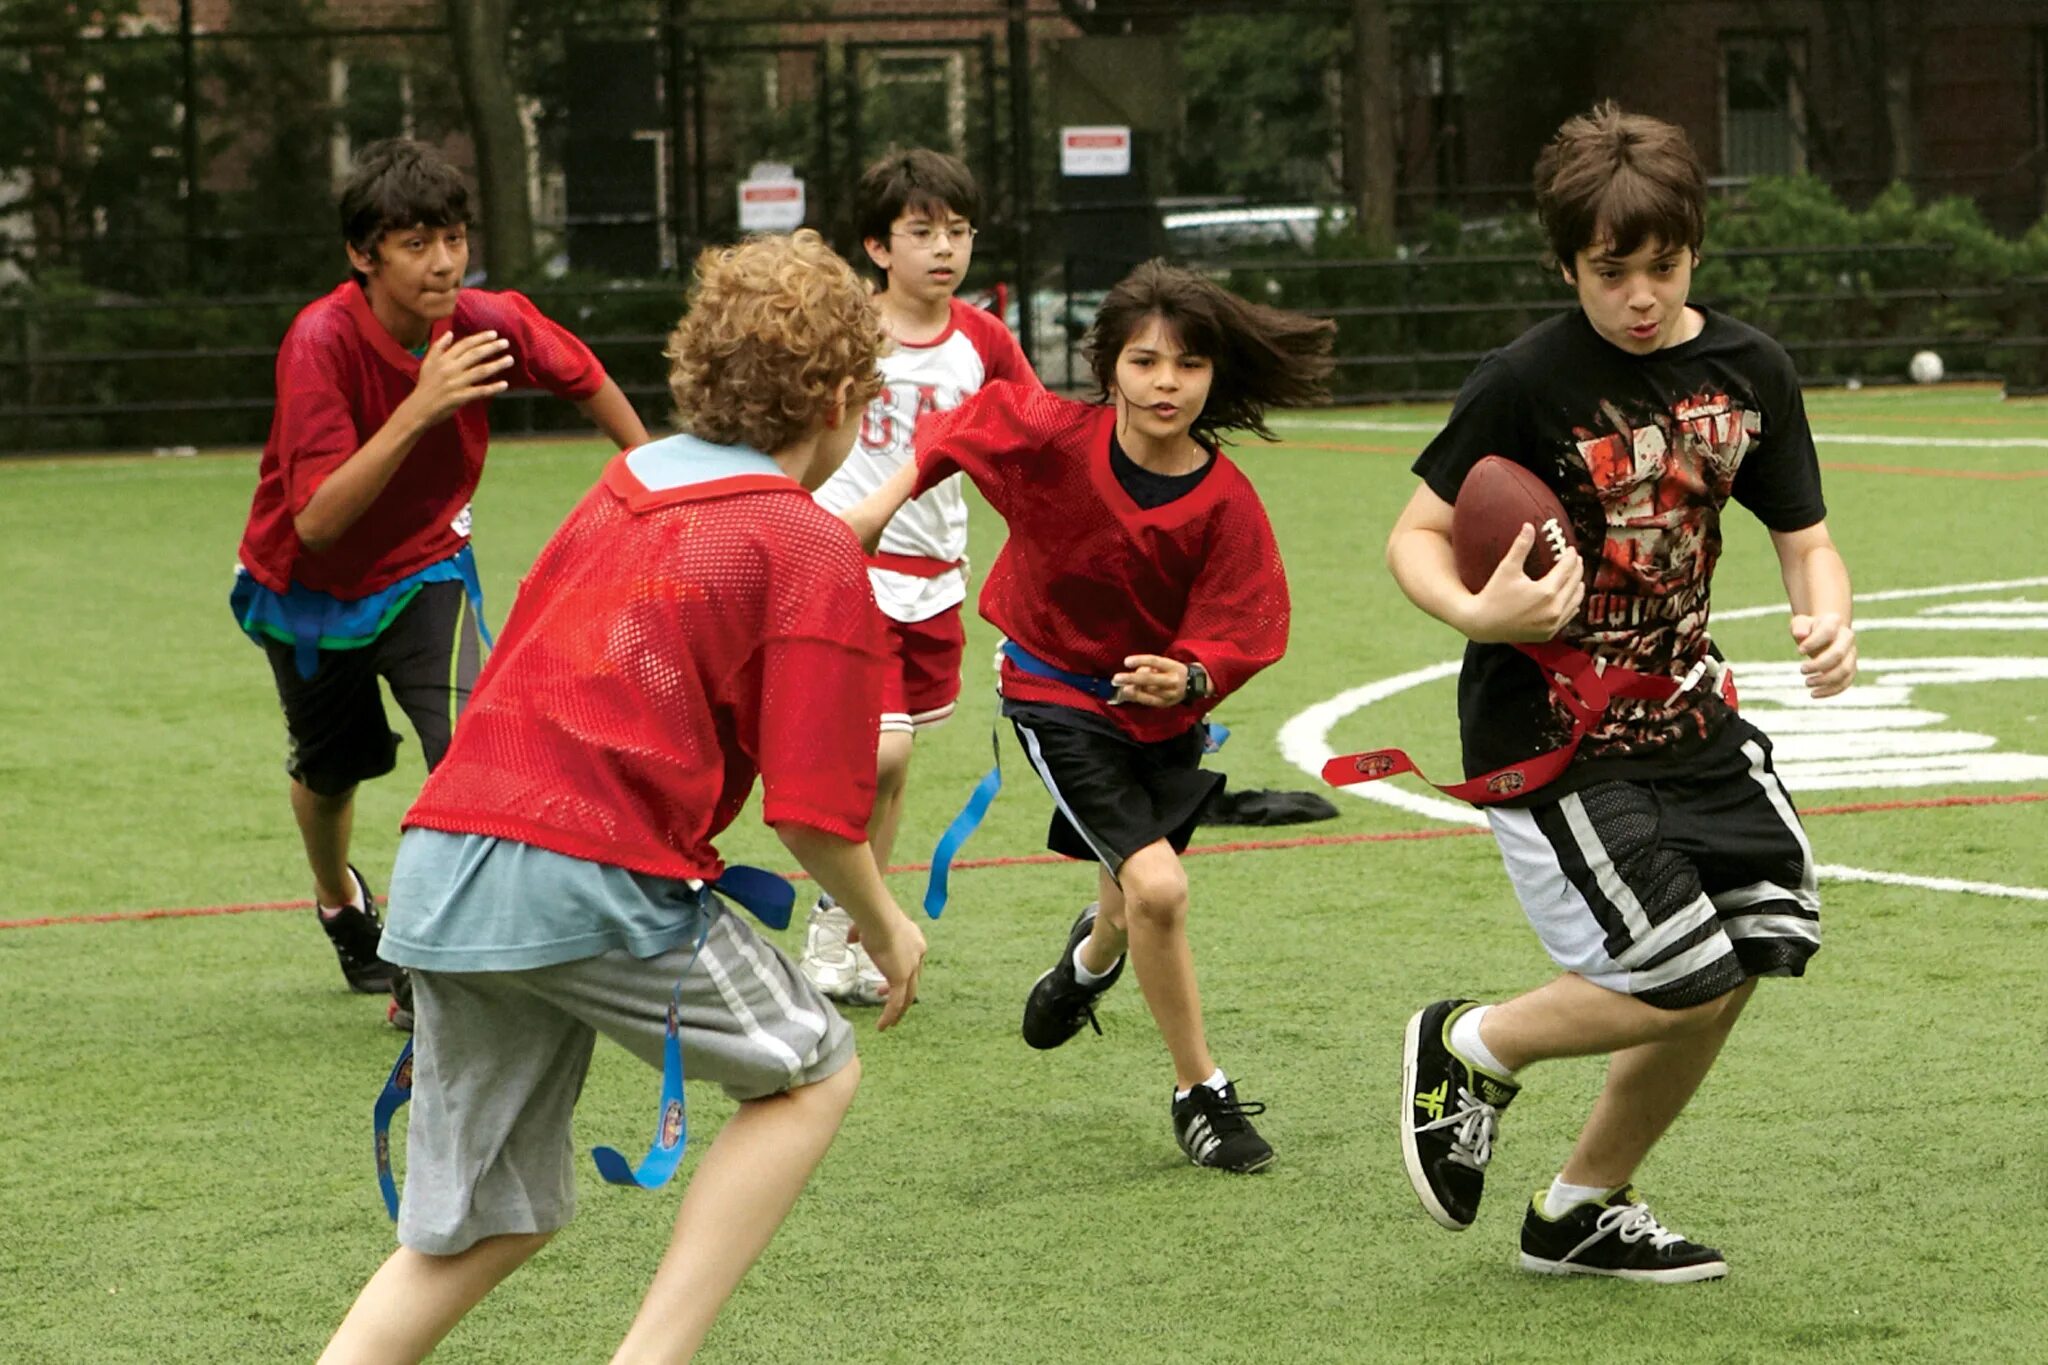 Фотосессия в стиле старшая школа спорт. Футбол после школы. Играть в футбол после школы. Роке спорт.